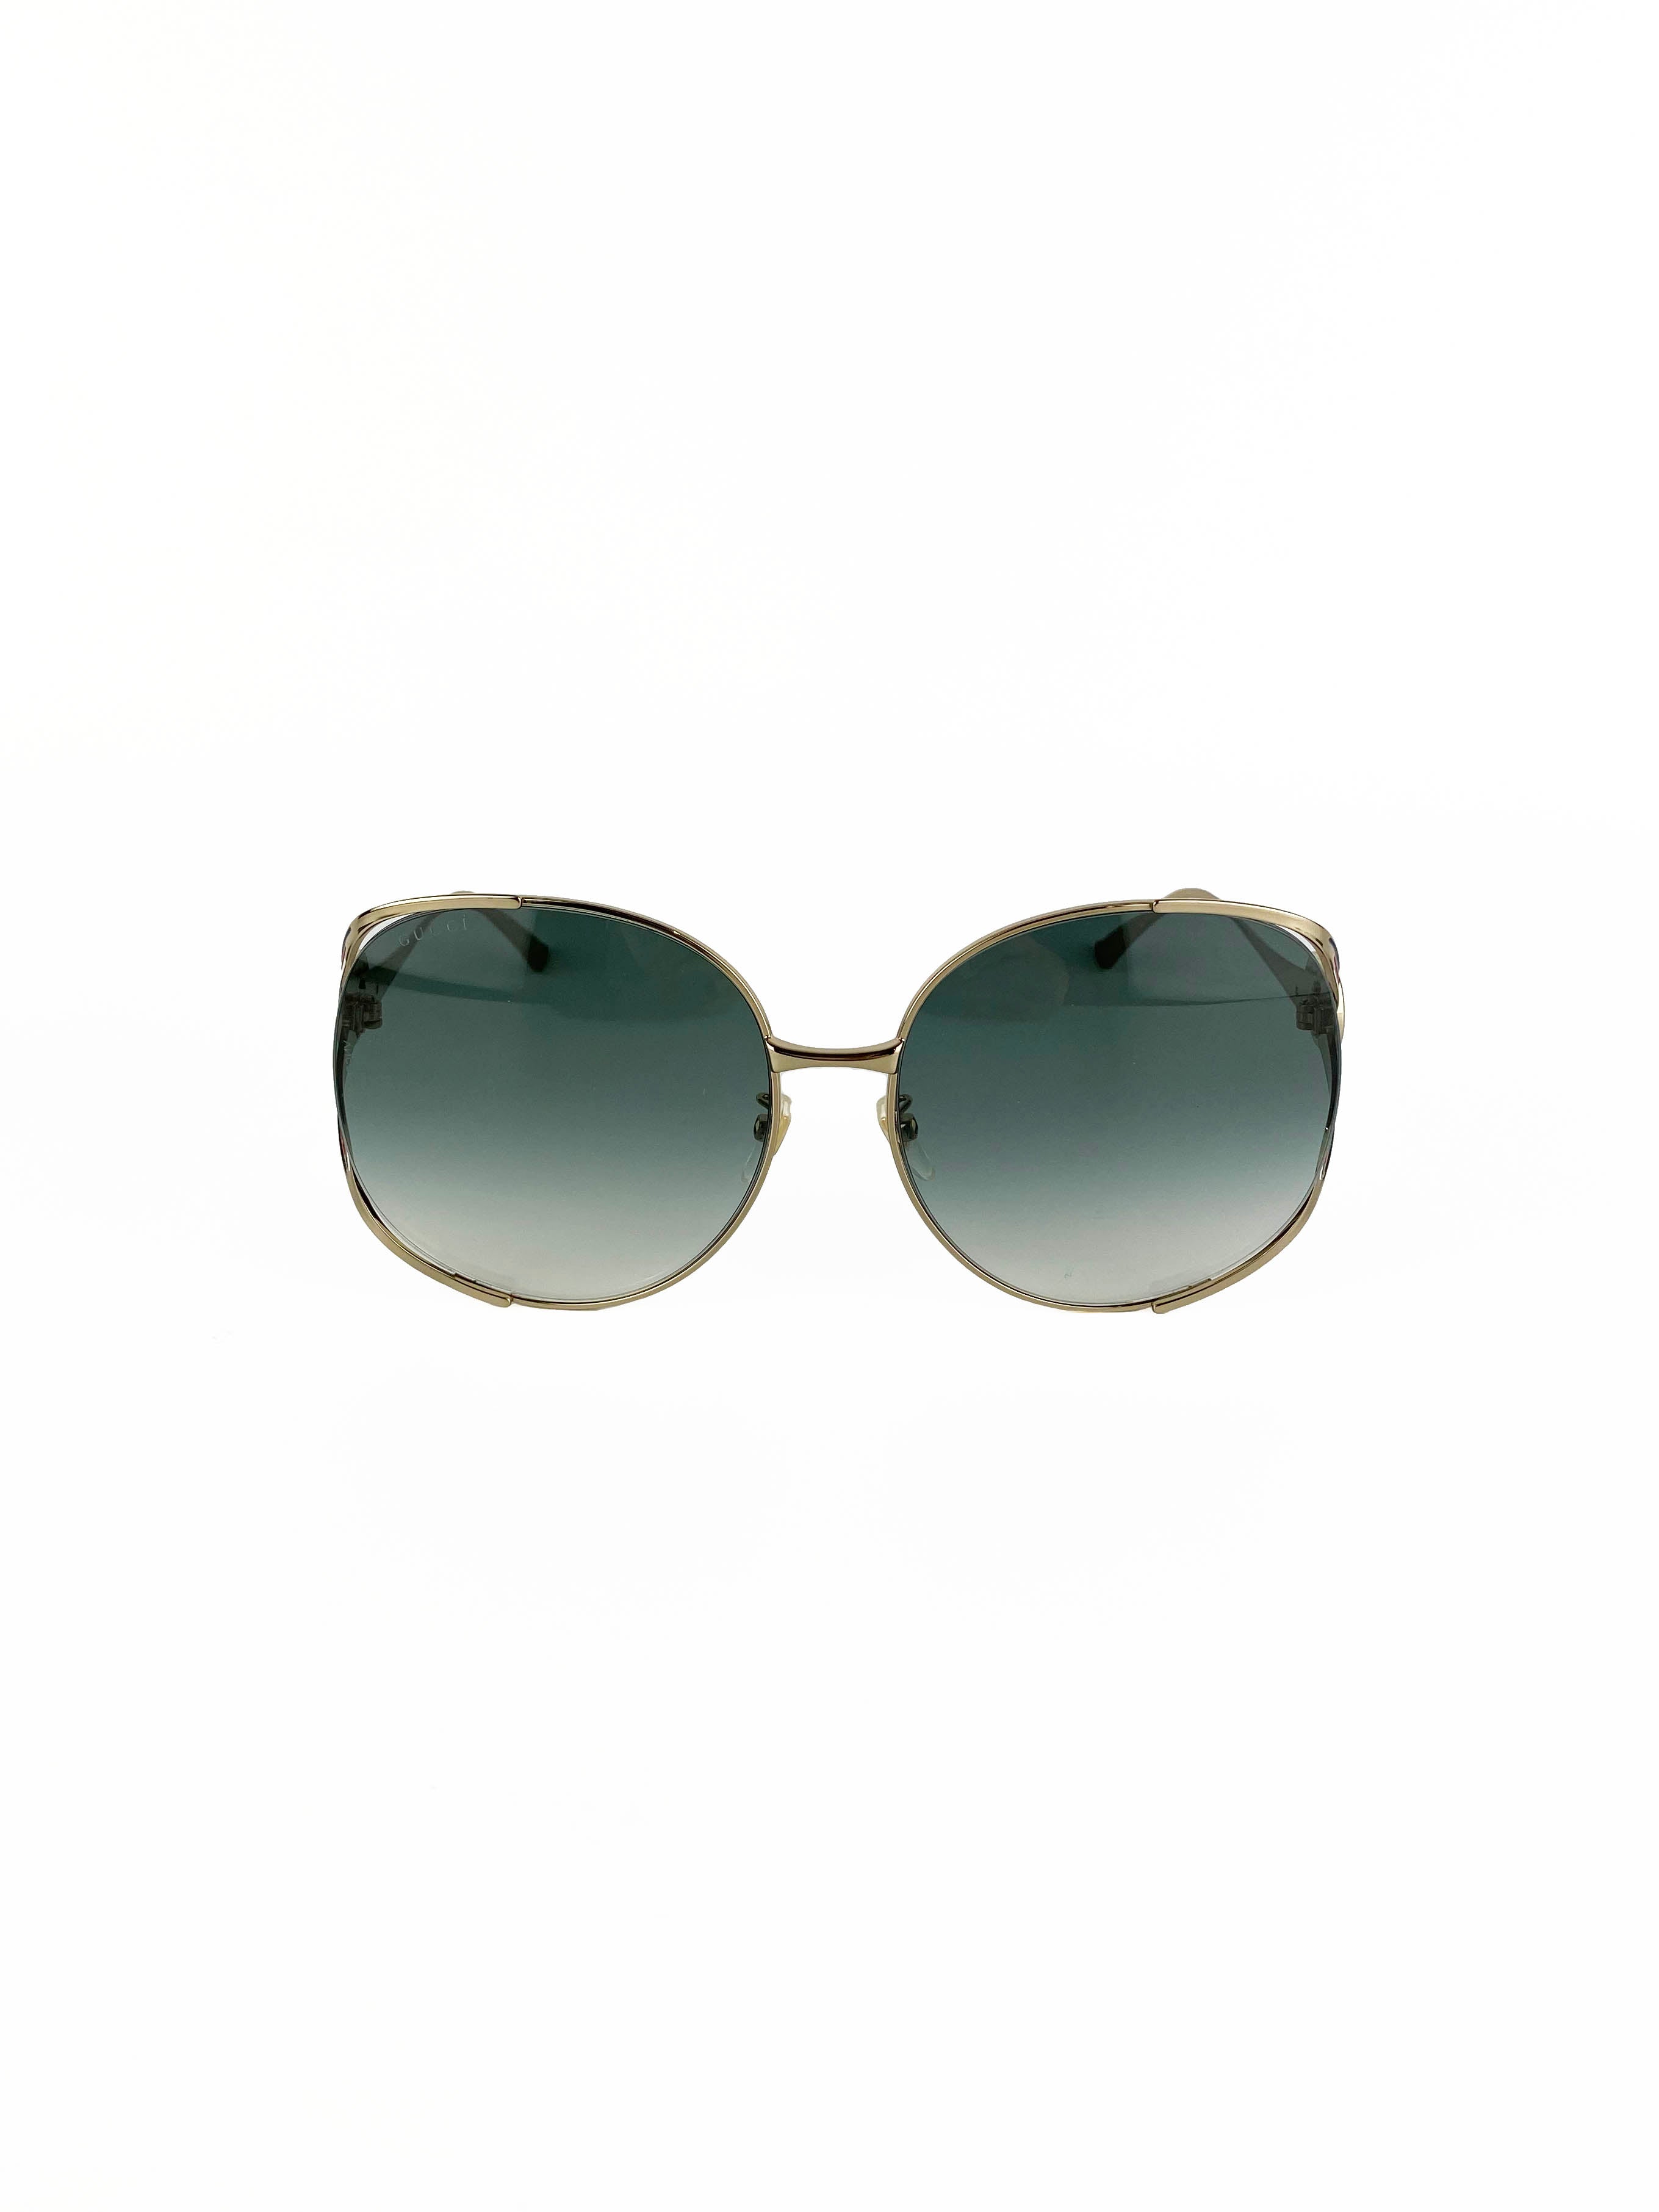 Gucci Round Metal Frame Sunglasses